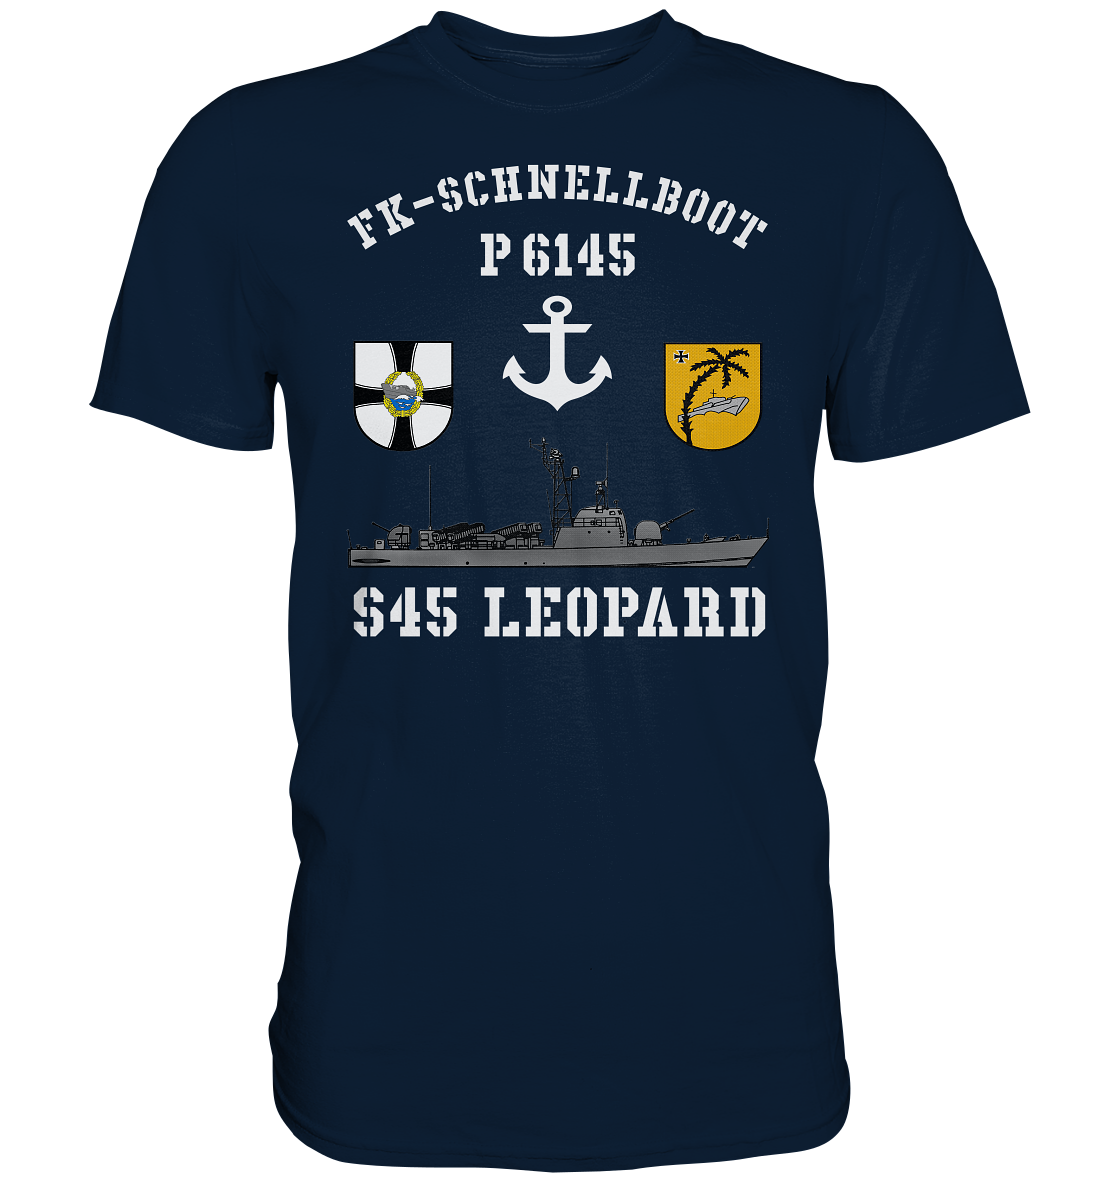 P6145 S45 LEOPARD - Premium Shirt